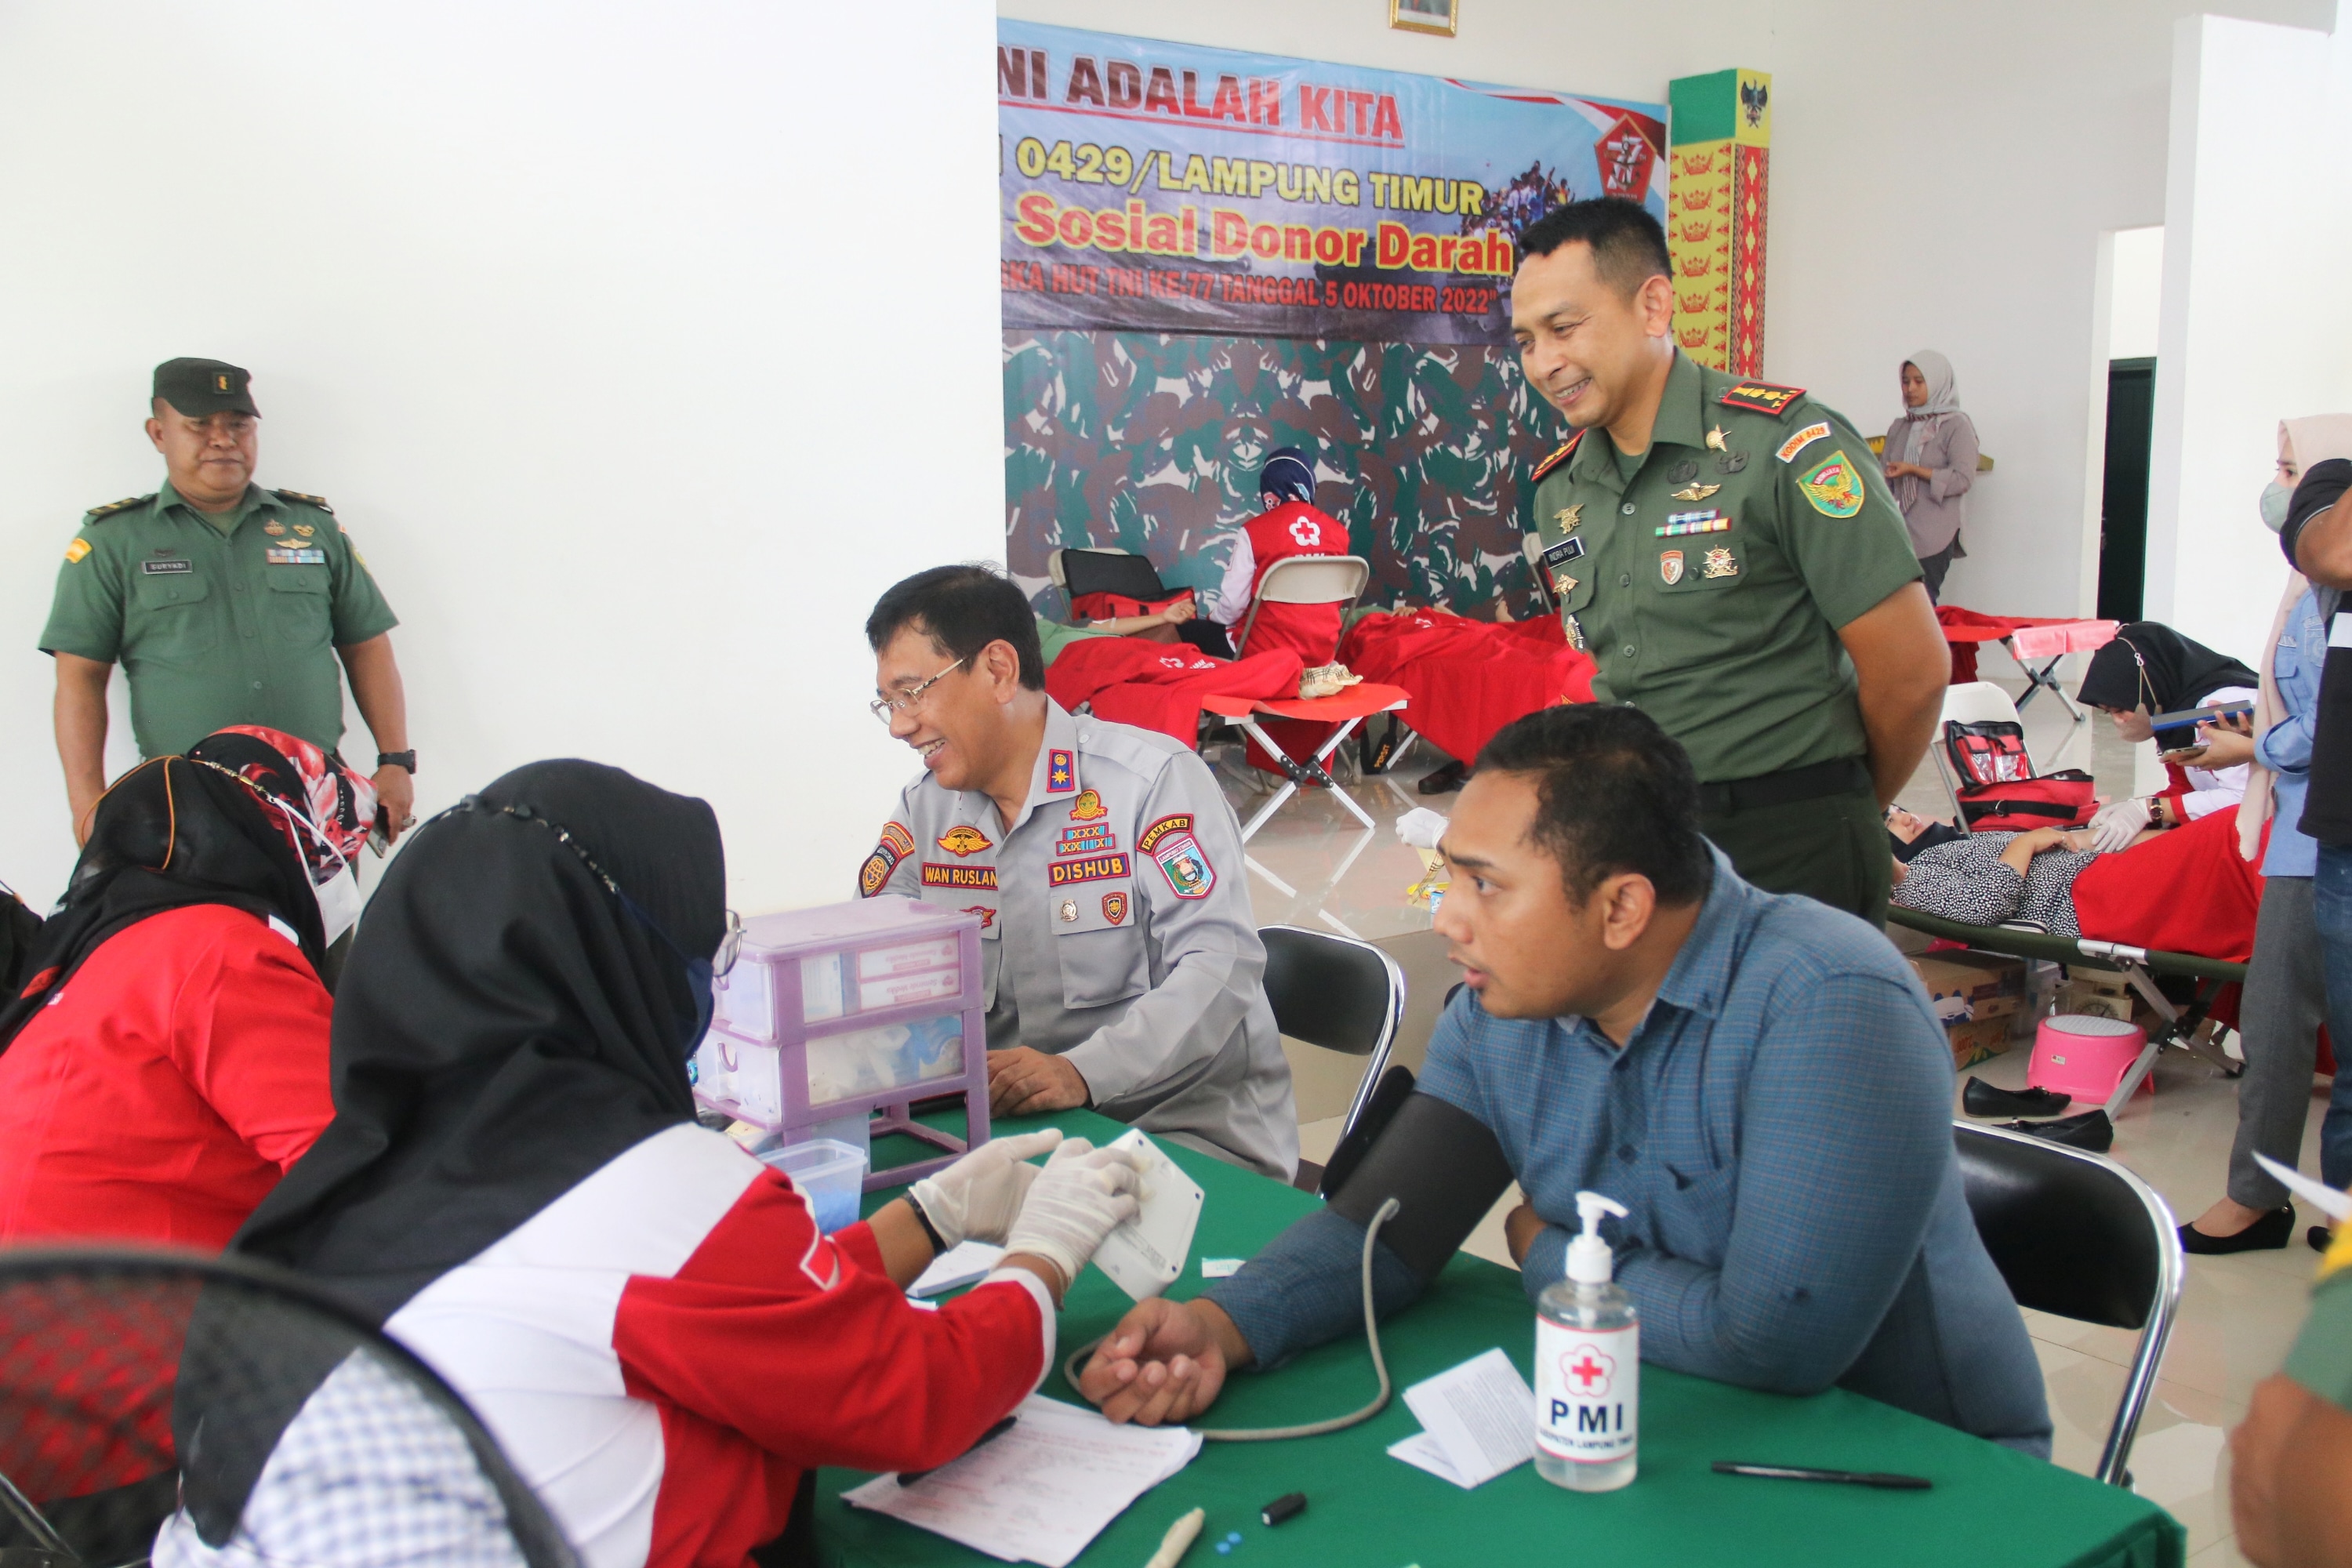 HUT ke-77 TNI, Kodim 0429 Lampung Timur Gelar Baksos Donor Darah